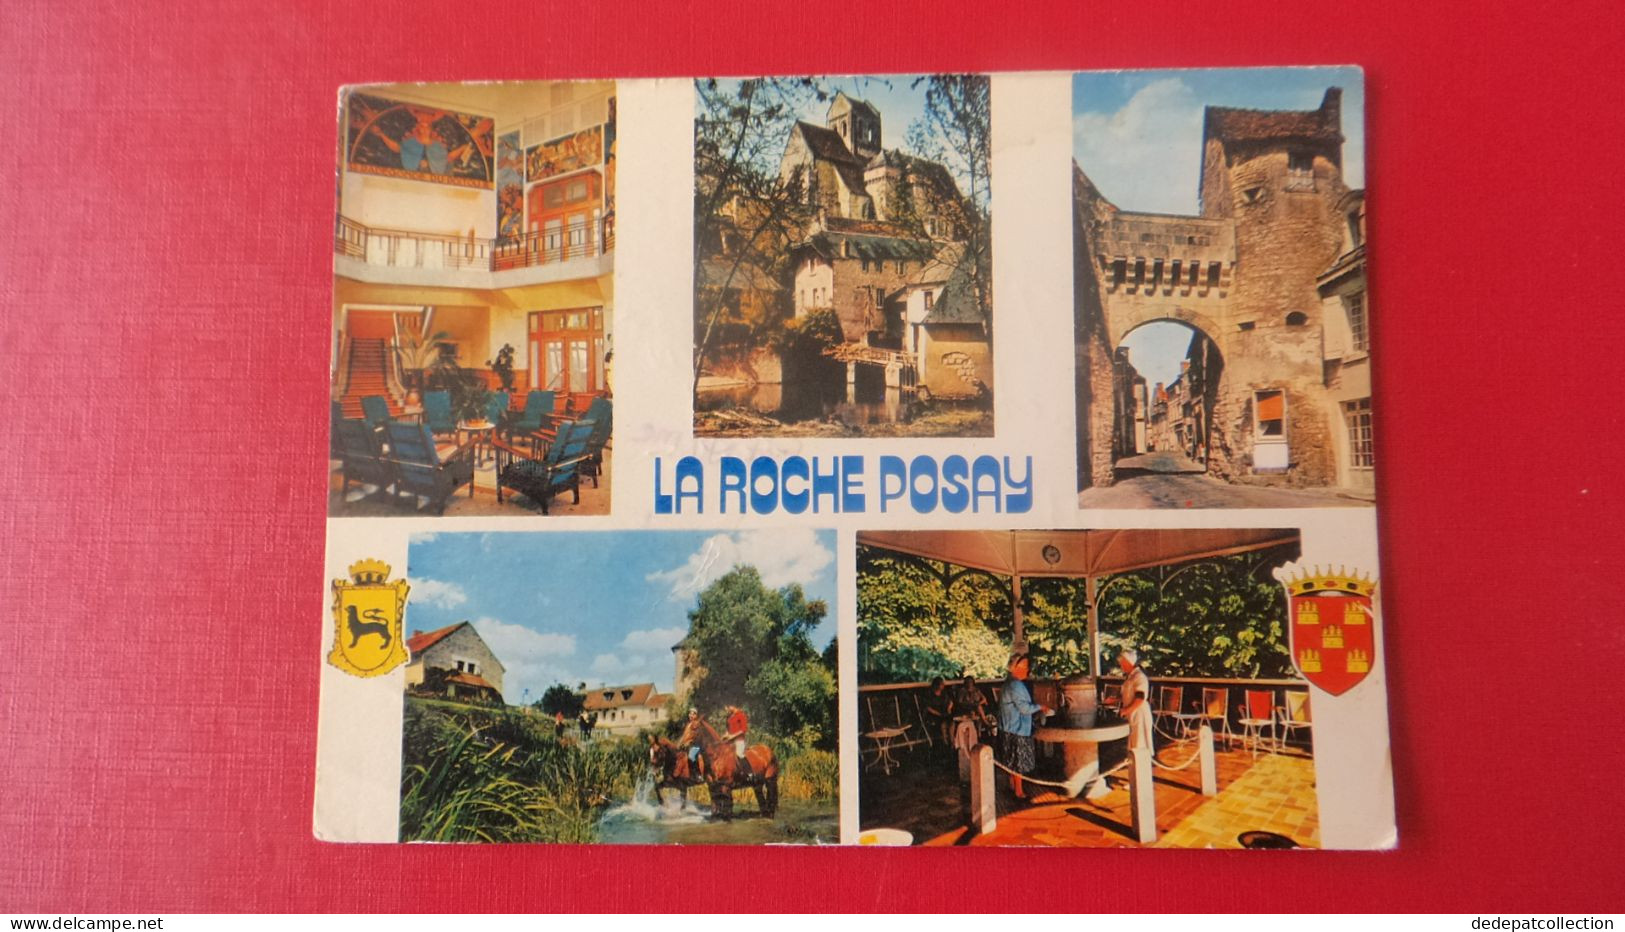 La Roche Posay - La Roche Posay